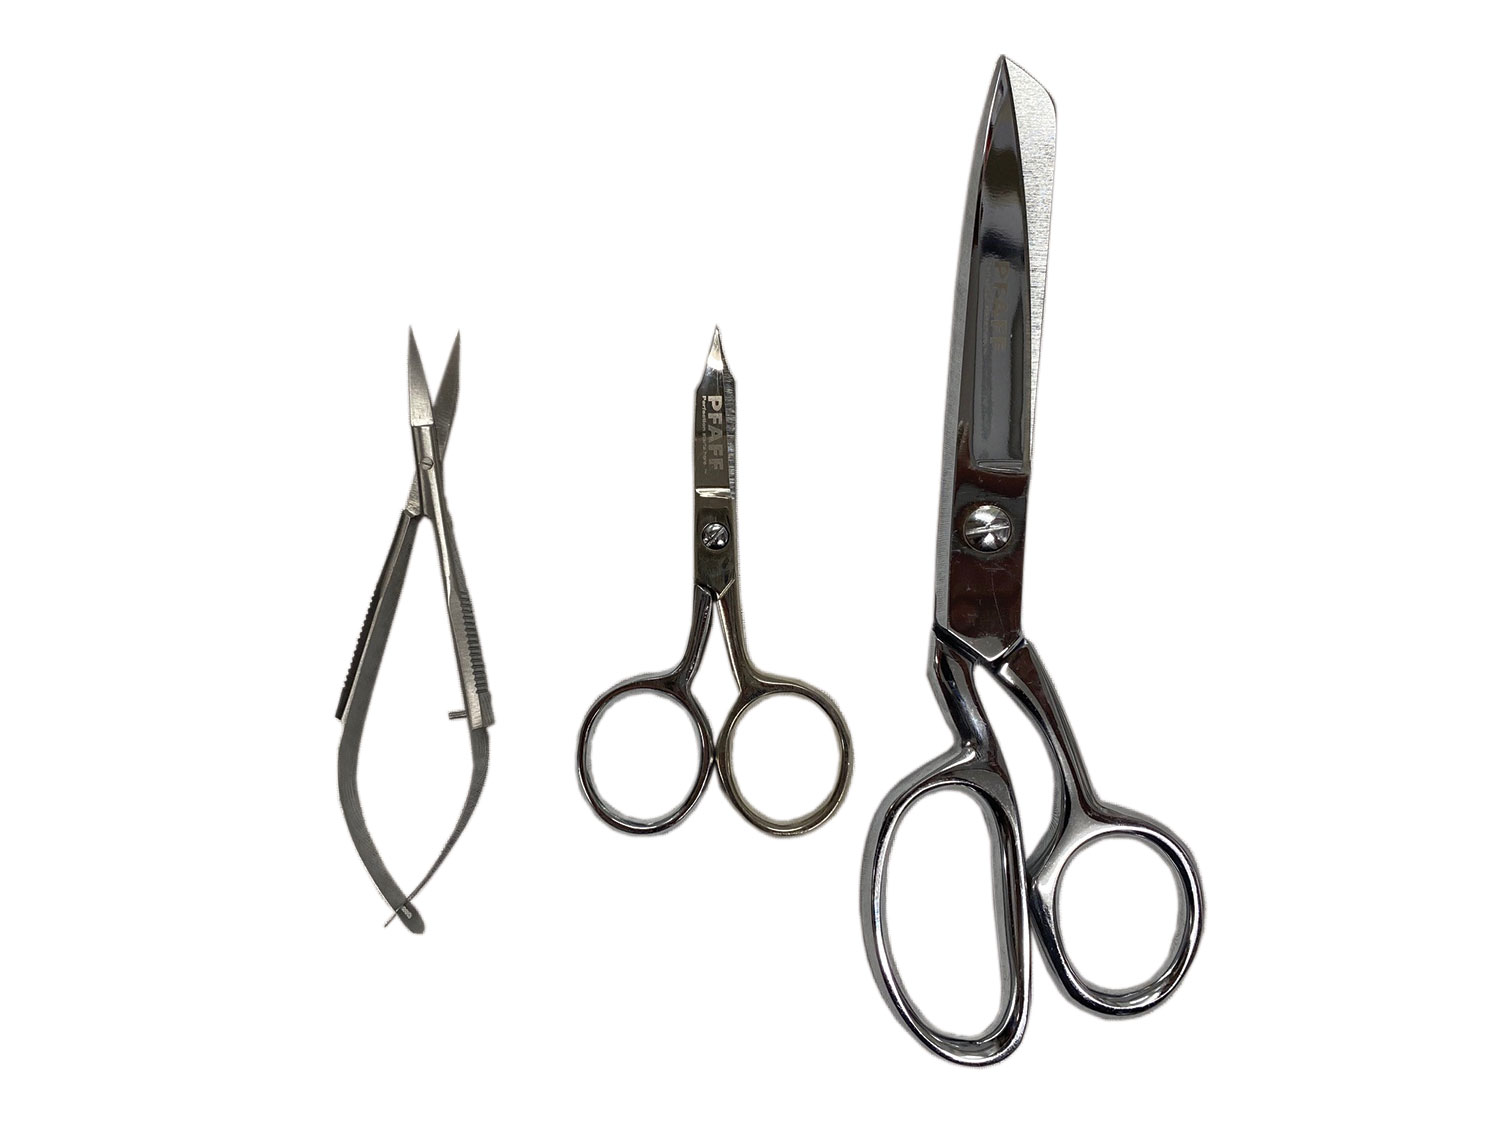 scissors set 2